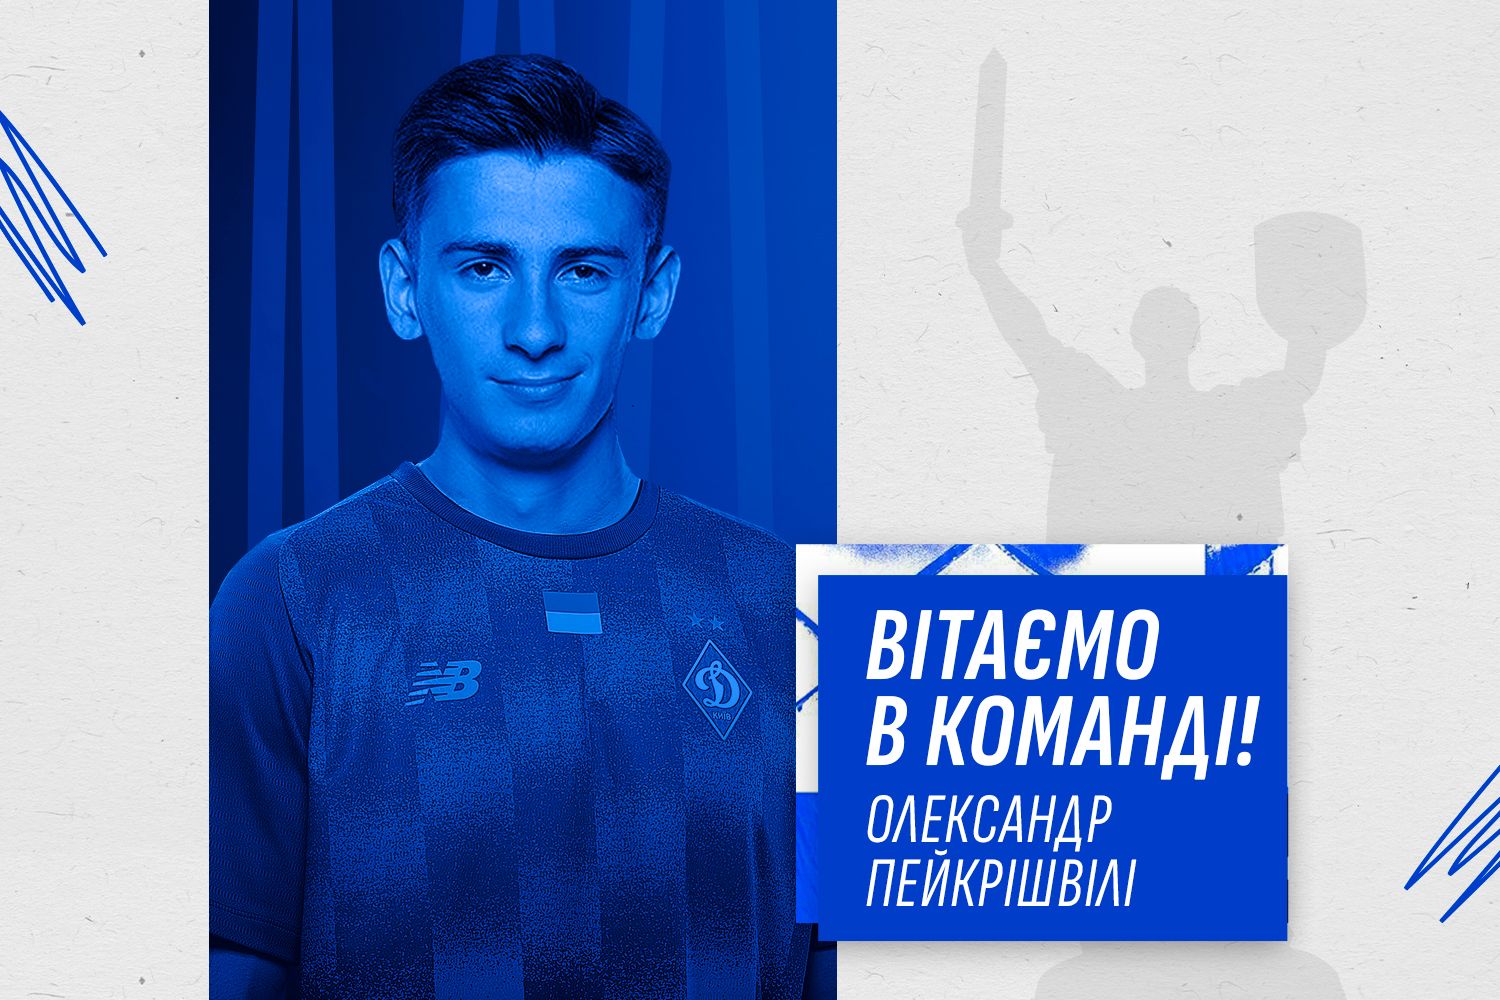 Aleksandre Peikrishvili – Dynamo player!